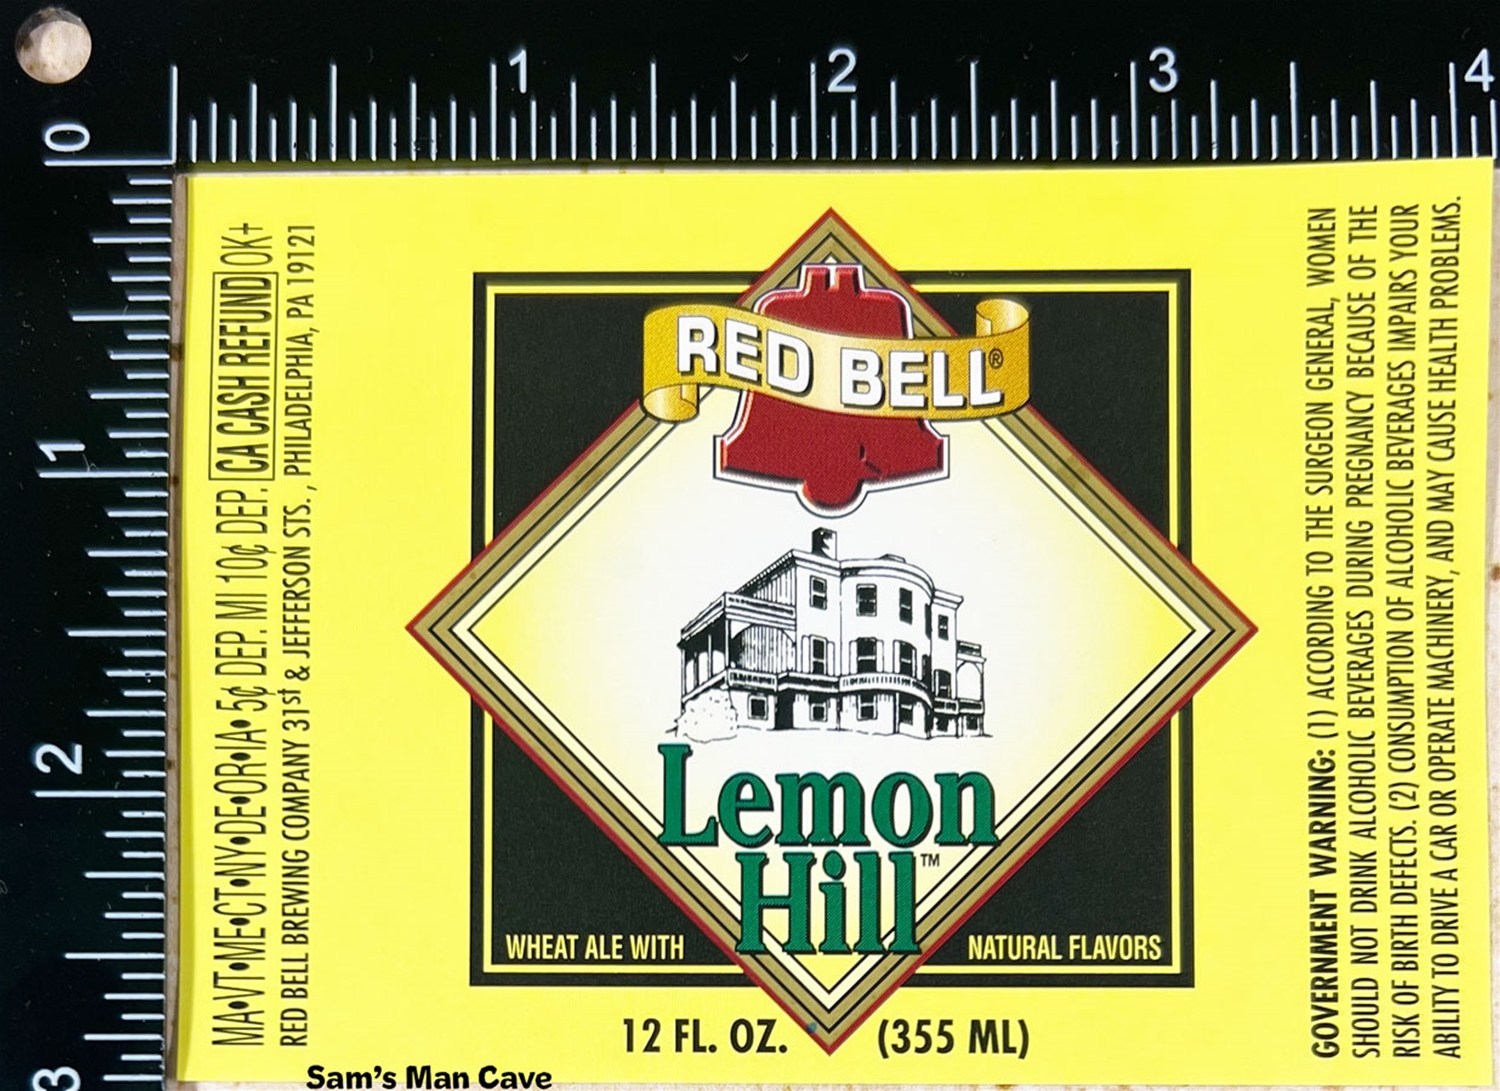 Red Bell Lemon Hill Beer Label